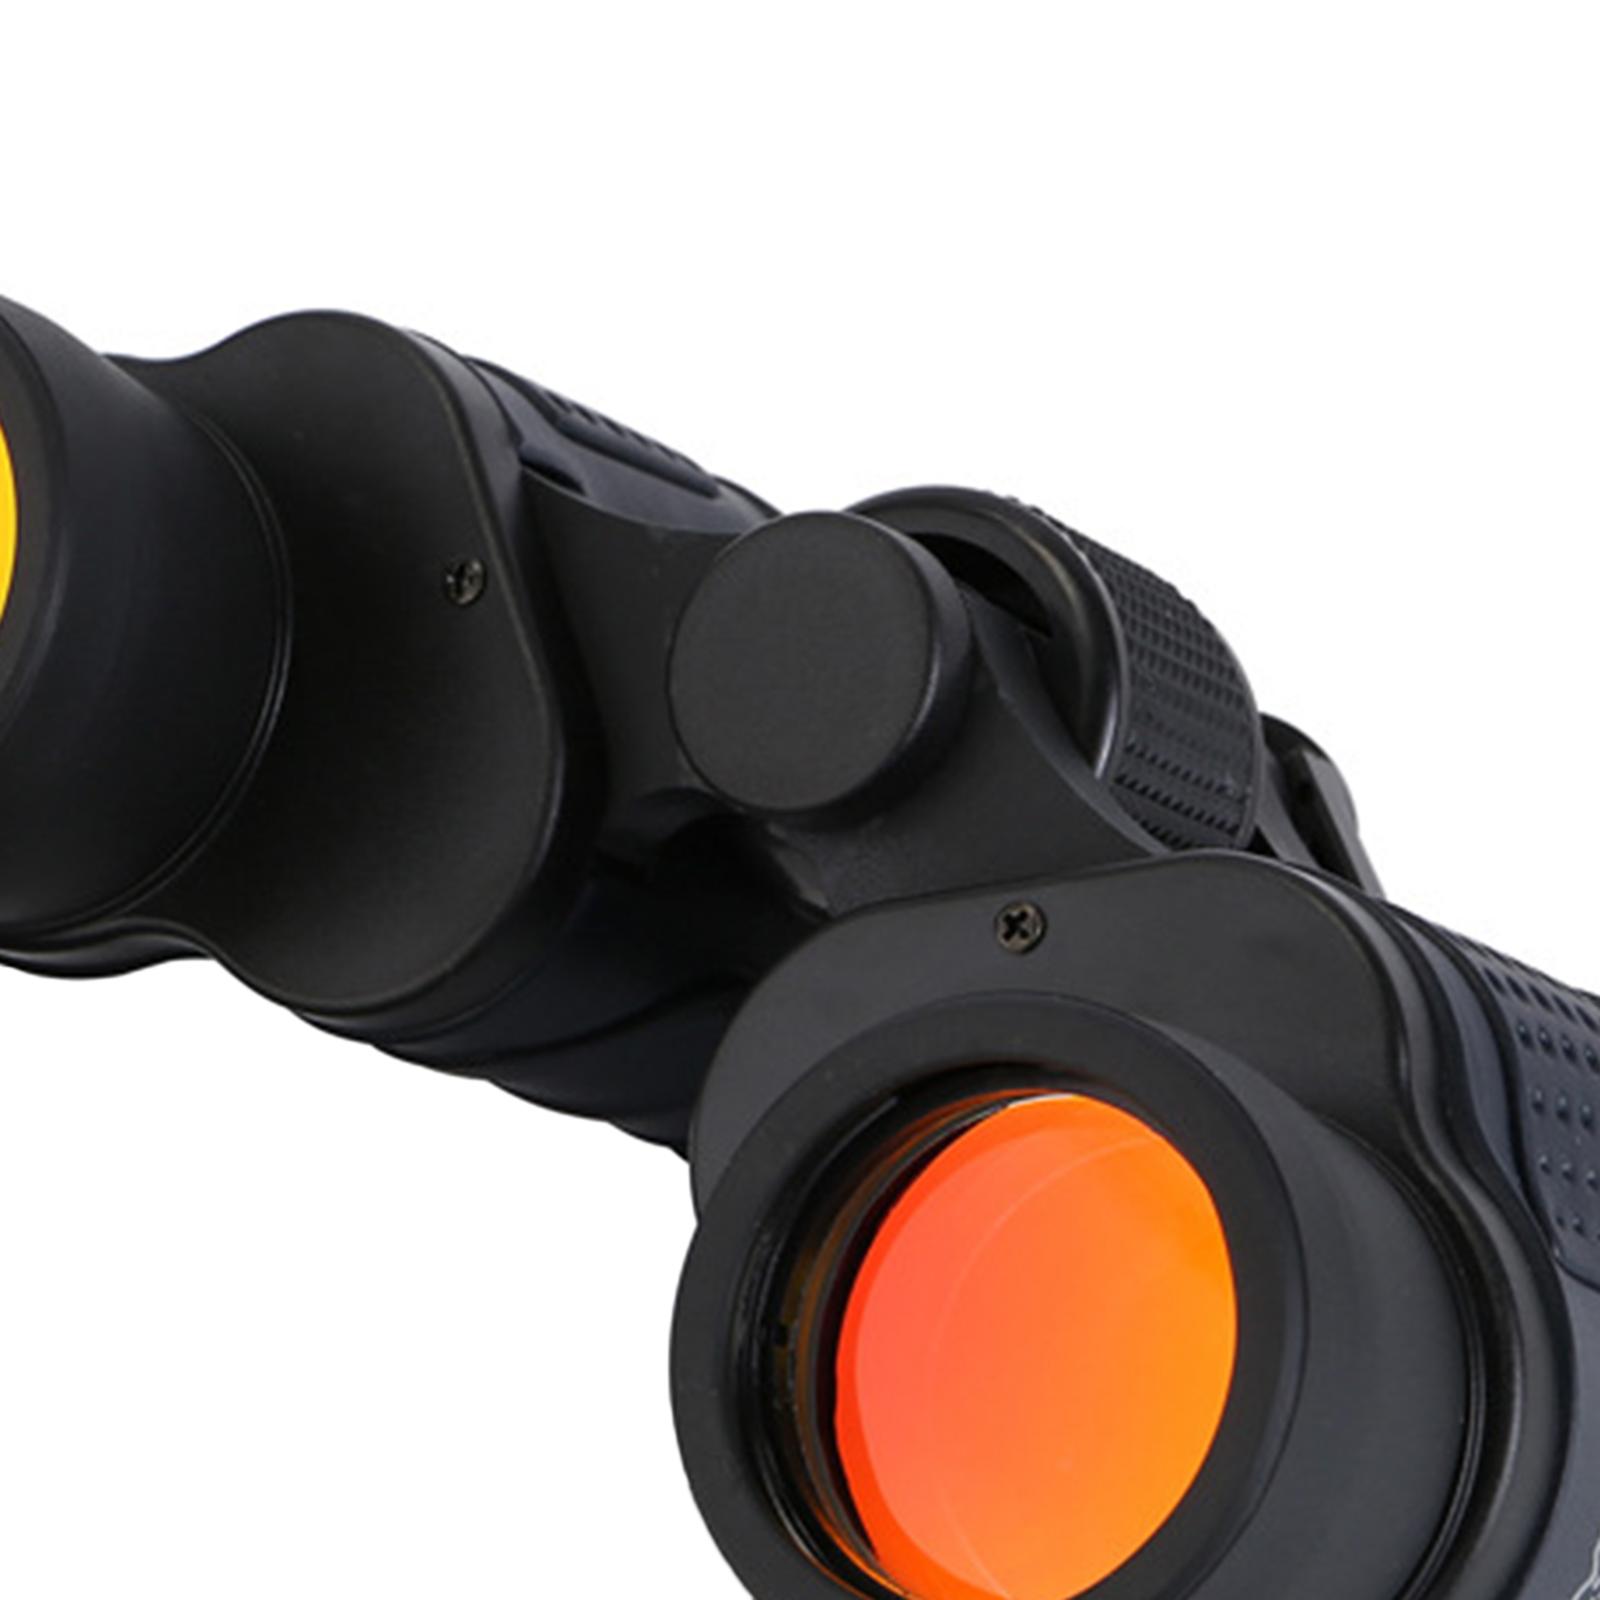 Portable Binoculars Low Light Sight for Mountaineering Hiking Field Work